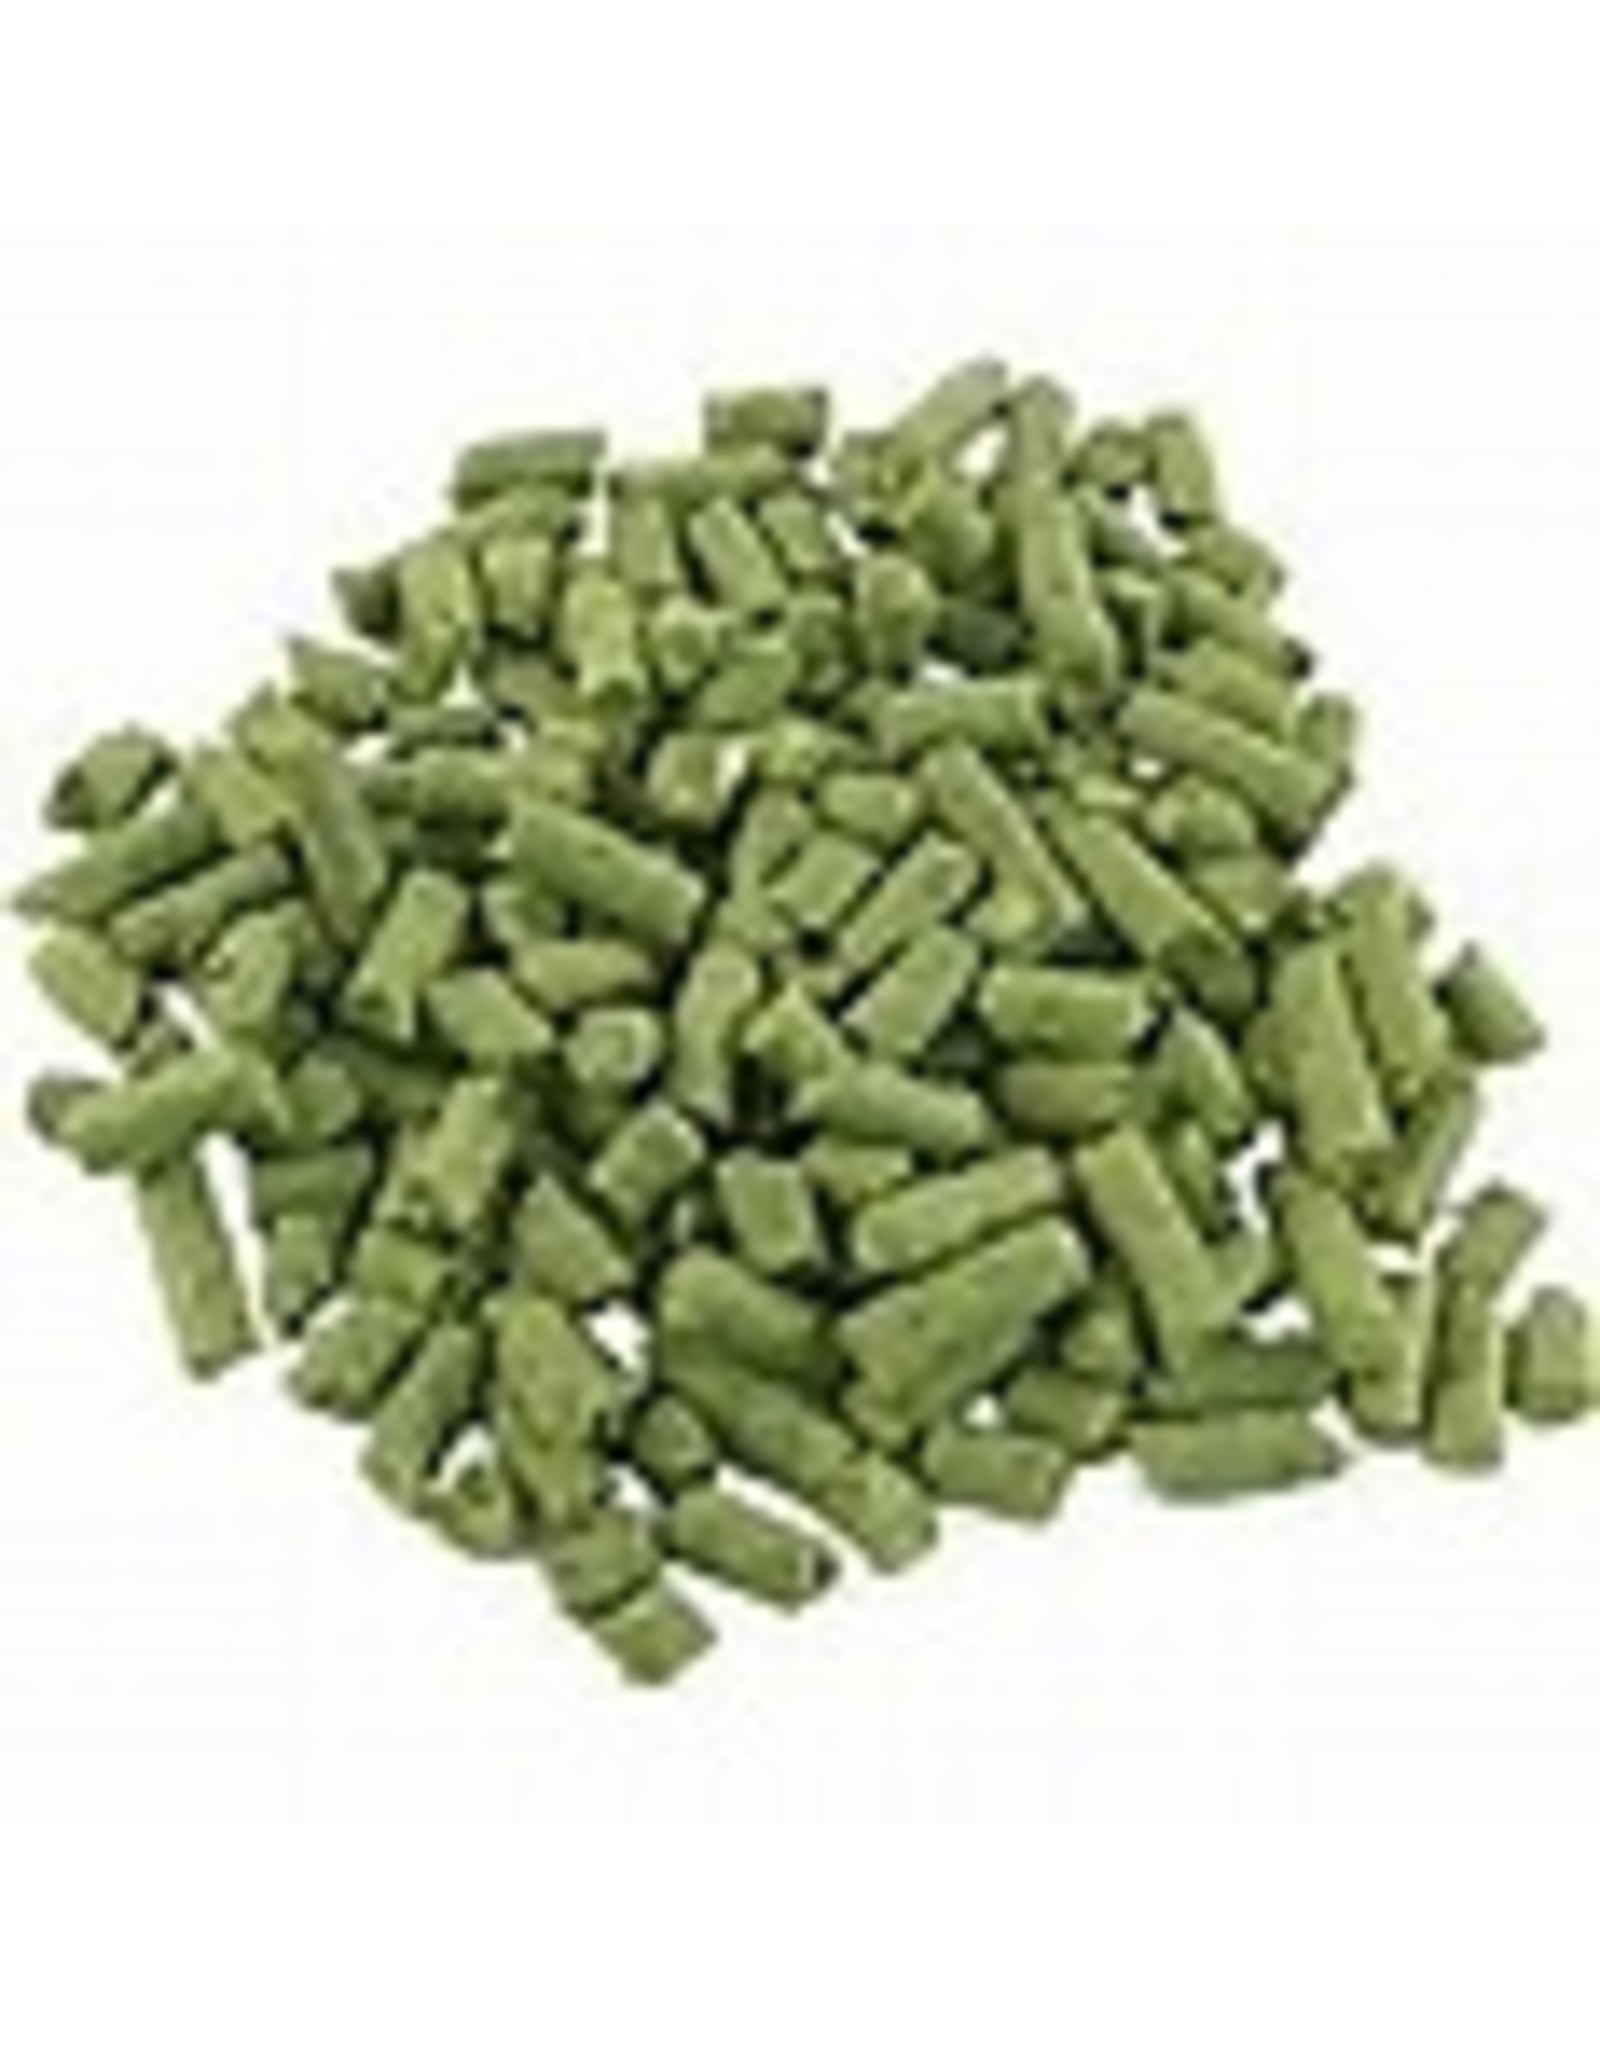 Green Bullet hop pellets